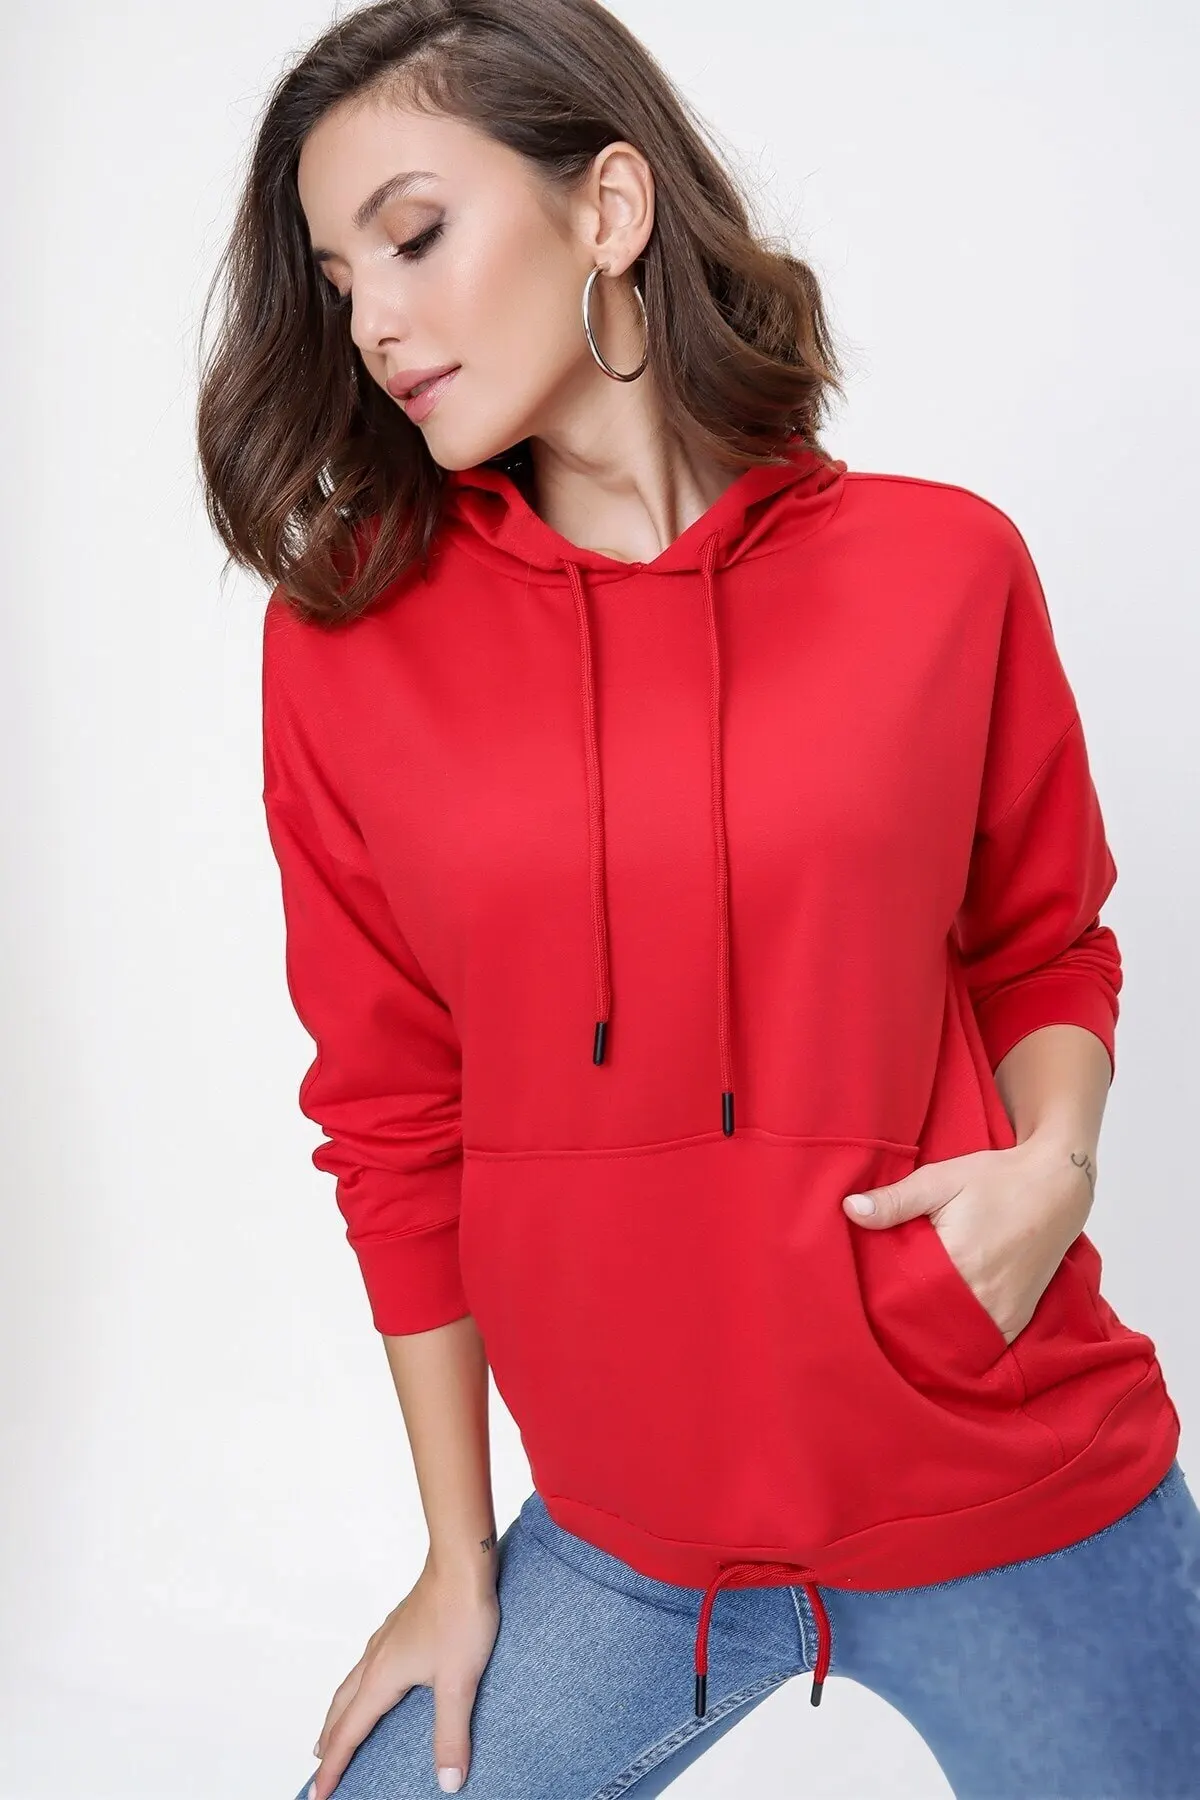 

Women's Sweatshirt Hooded 2 Thread Kangaroo Pocket LaceUp Red Hoodies Fashion All Season New Pullovers Fleece lovers Fleece